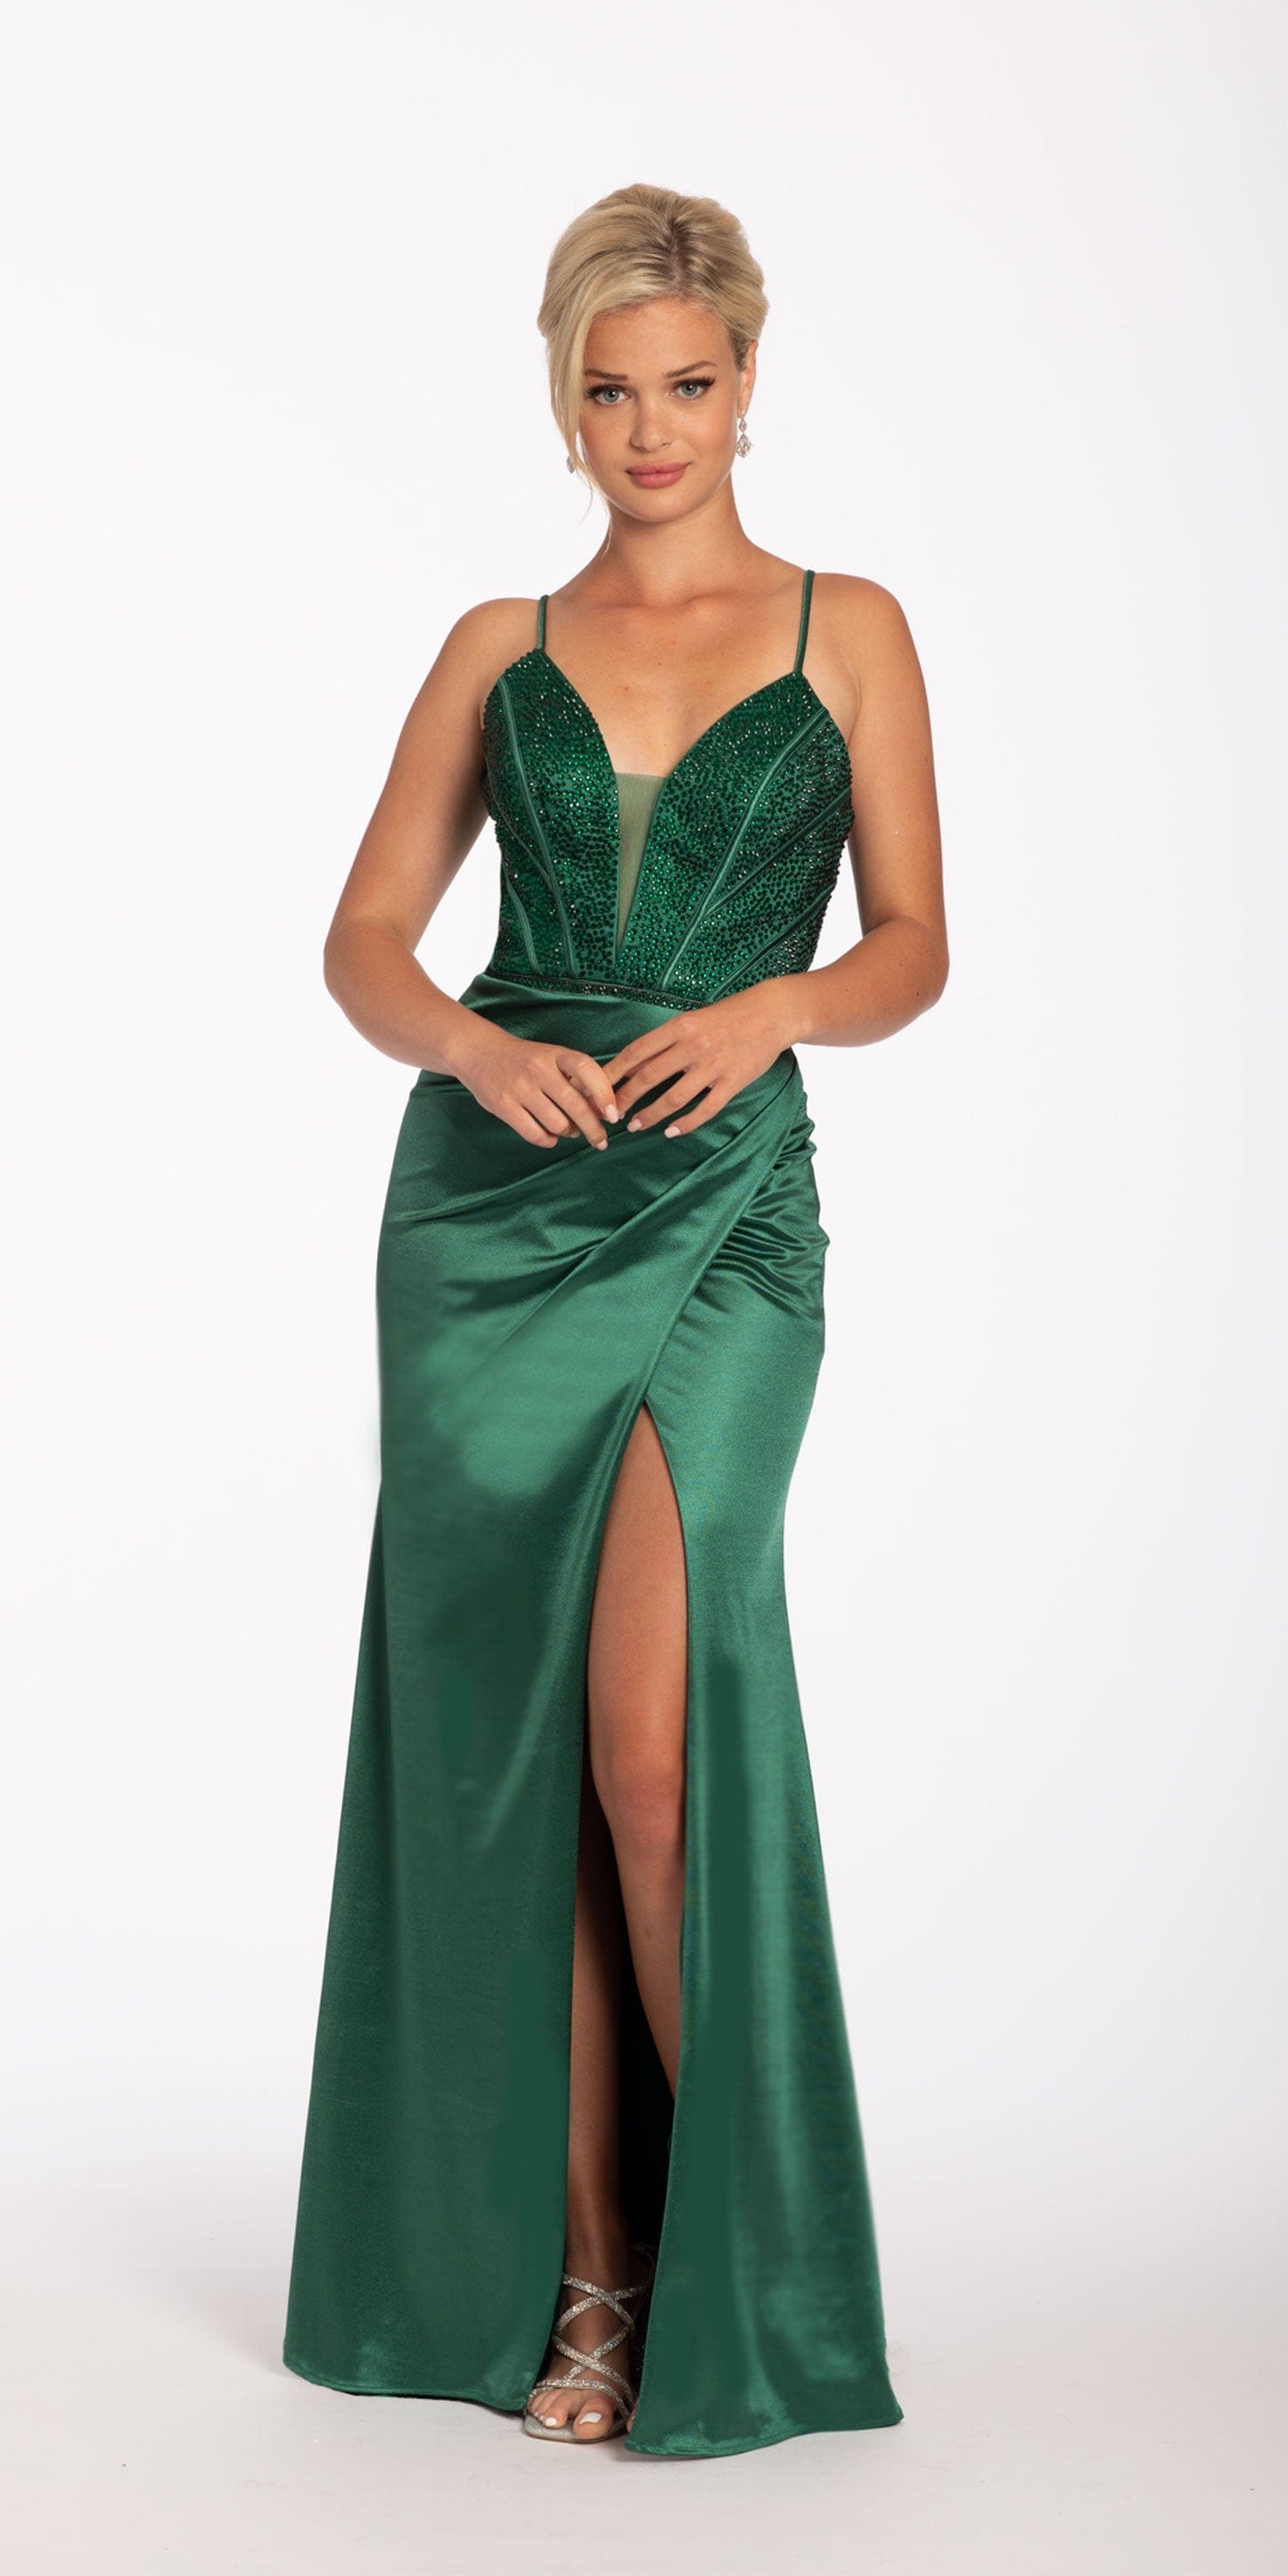 Camille La Vie Plunging  Heat Set Stones Dress with Side Slit petite / 0 / emerald